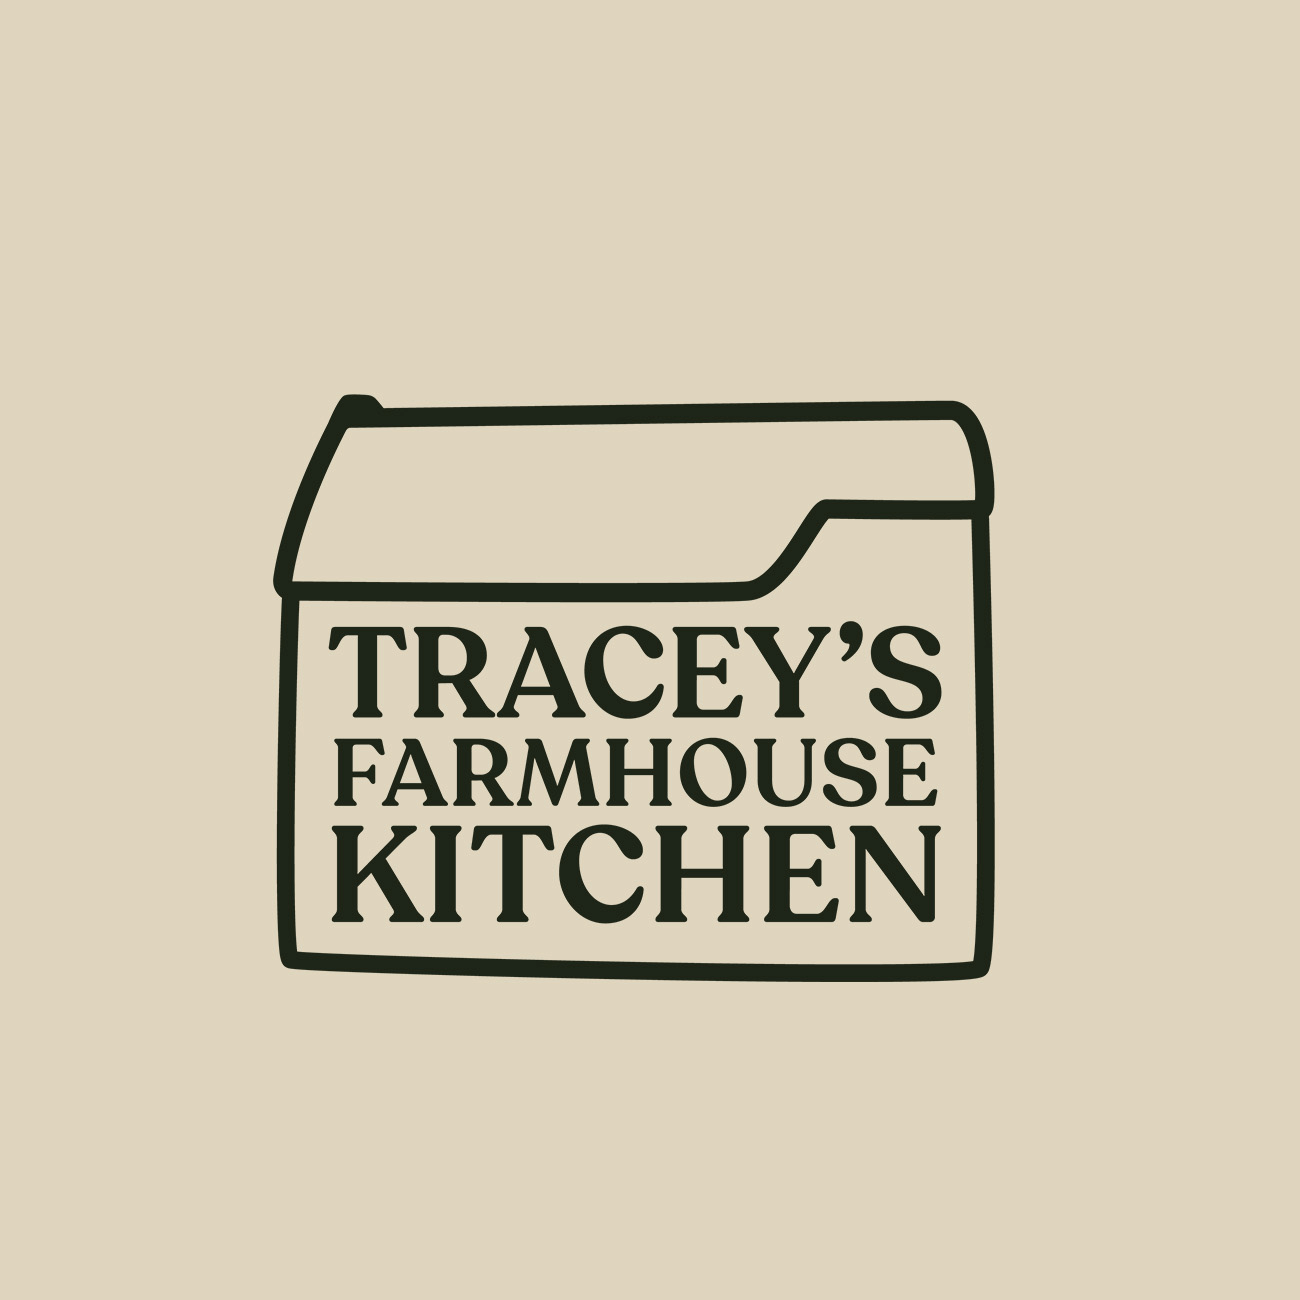 Tracey’s Farmhouse Kitchen